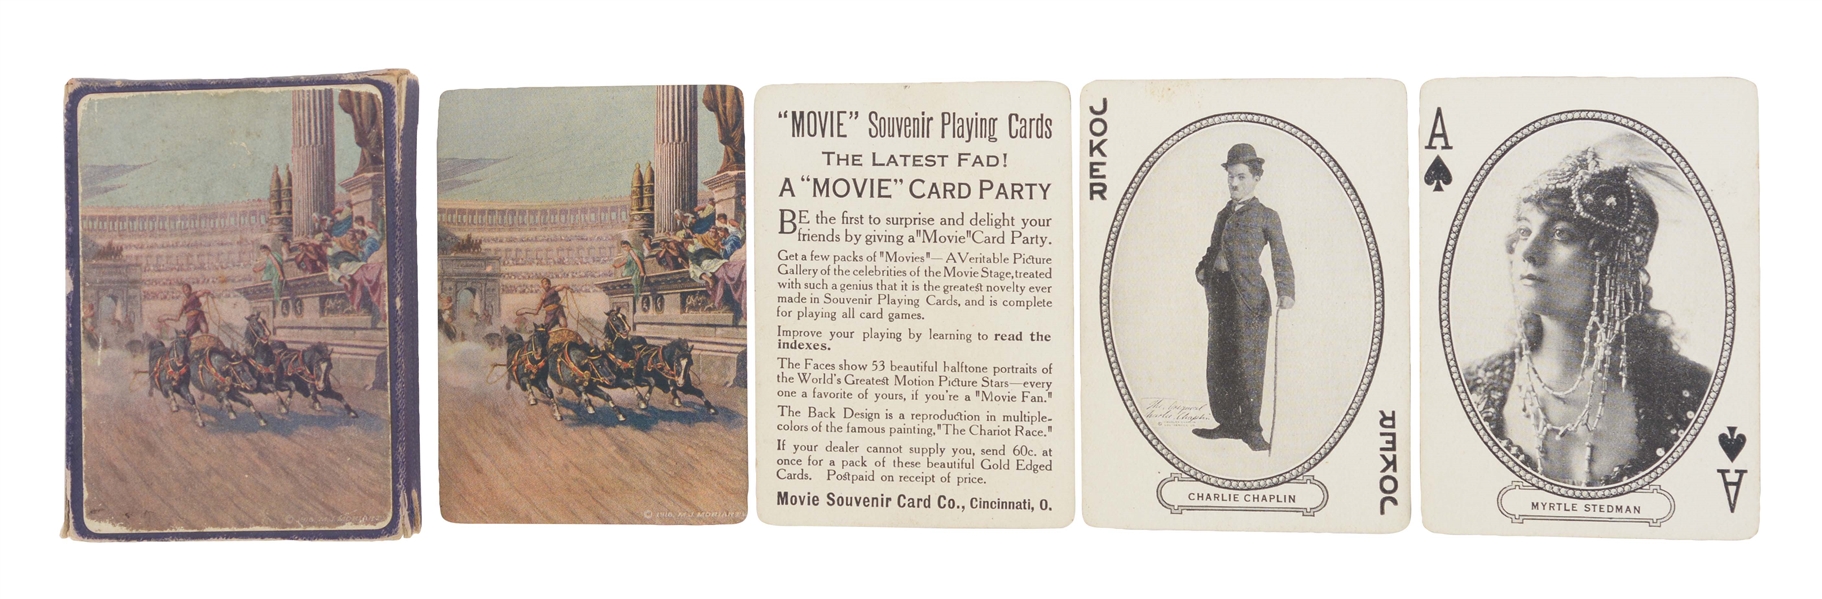 MOVIE SOUVENIR PLAYING CARDS IN ORIGINAL BOX. 